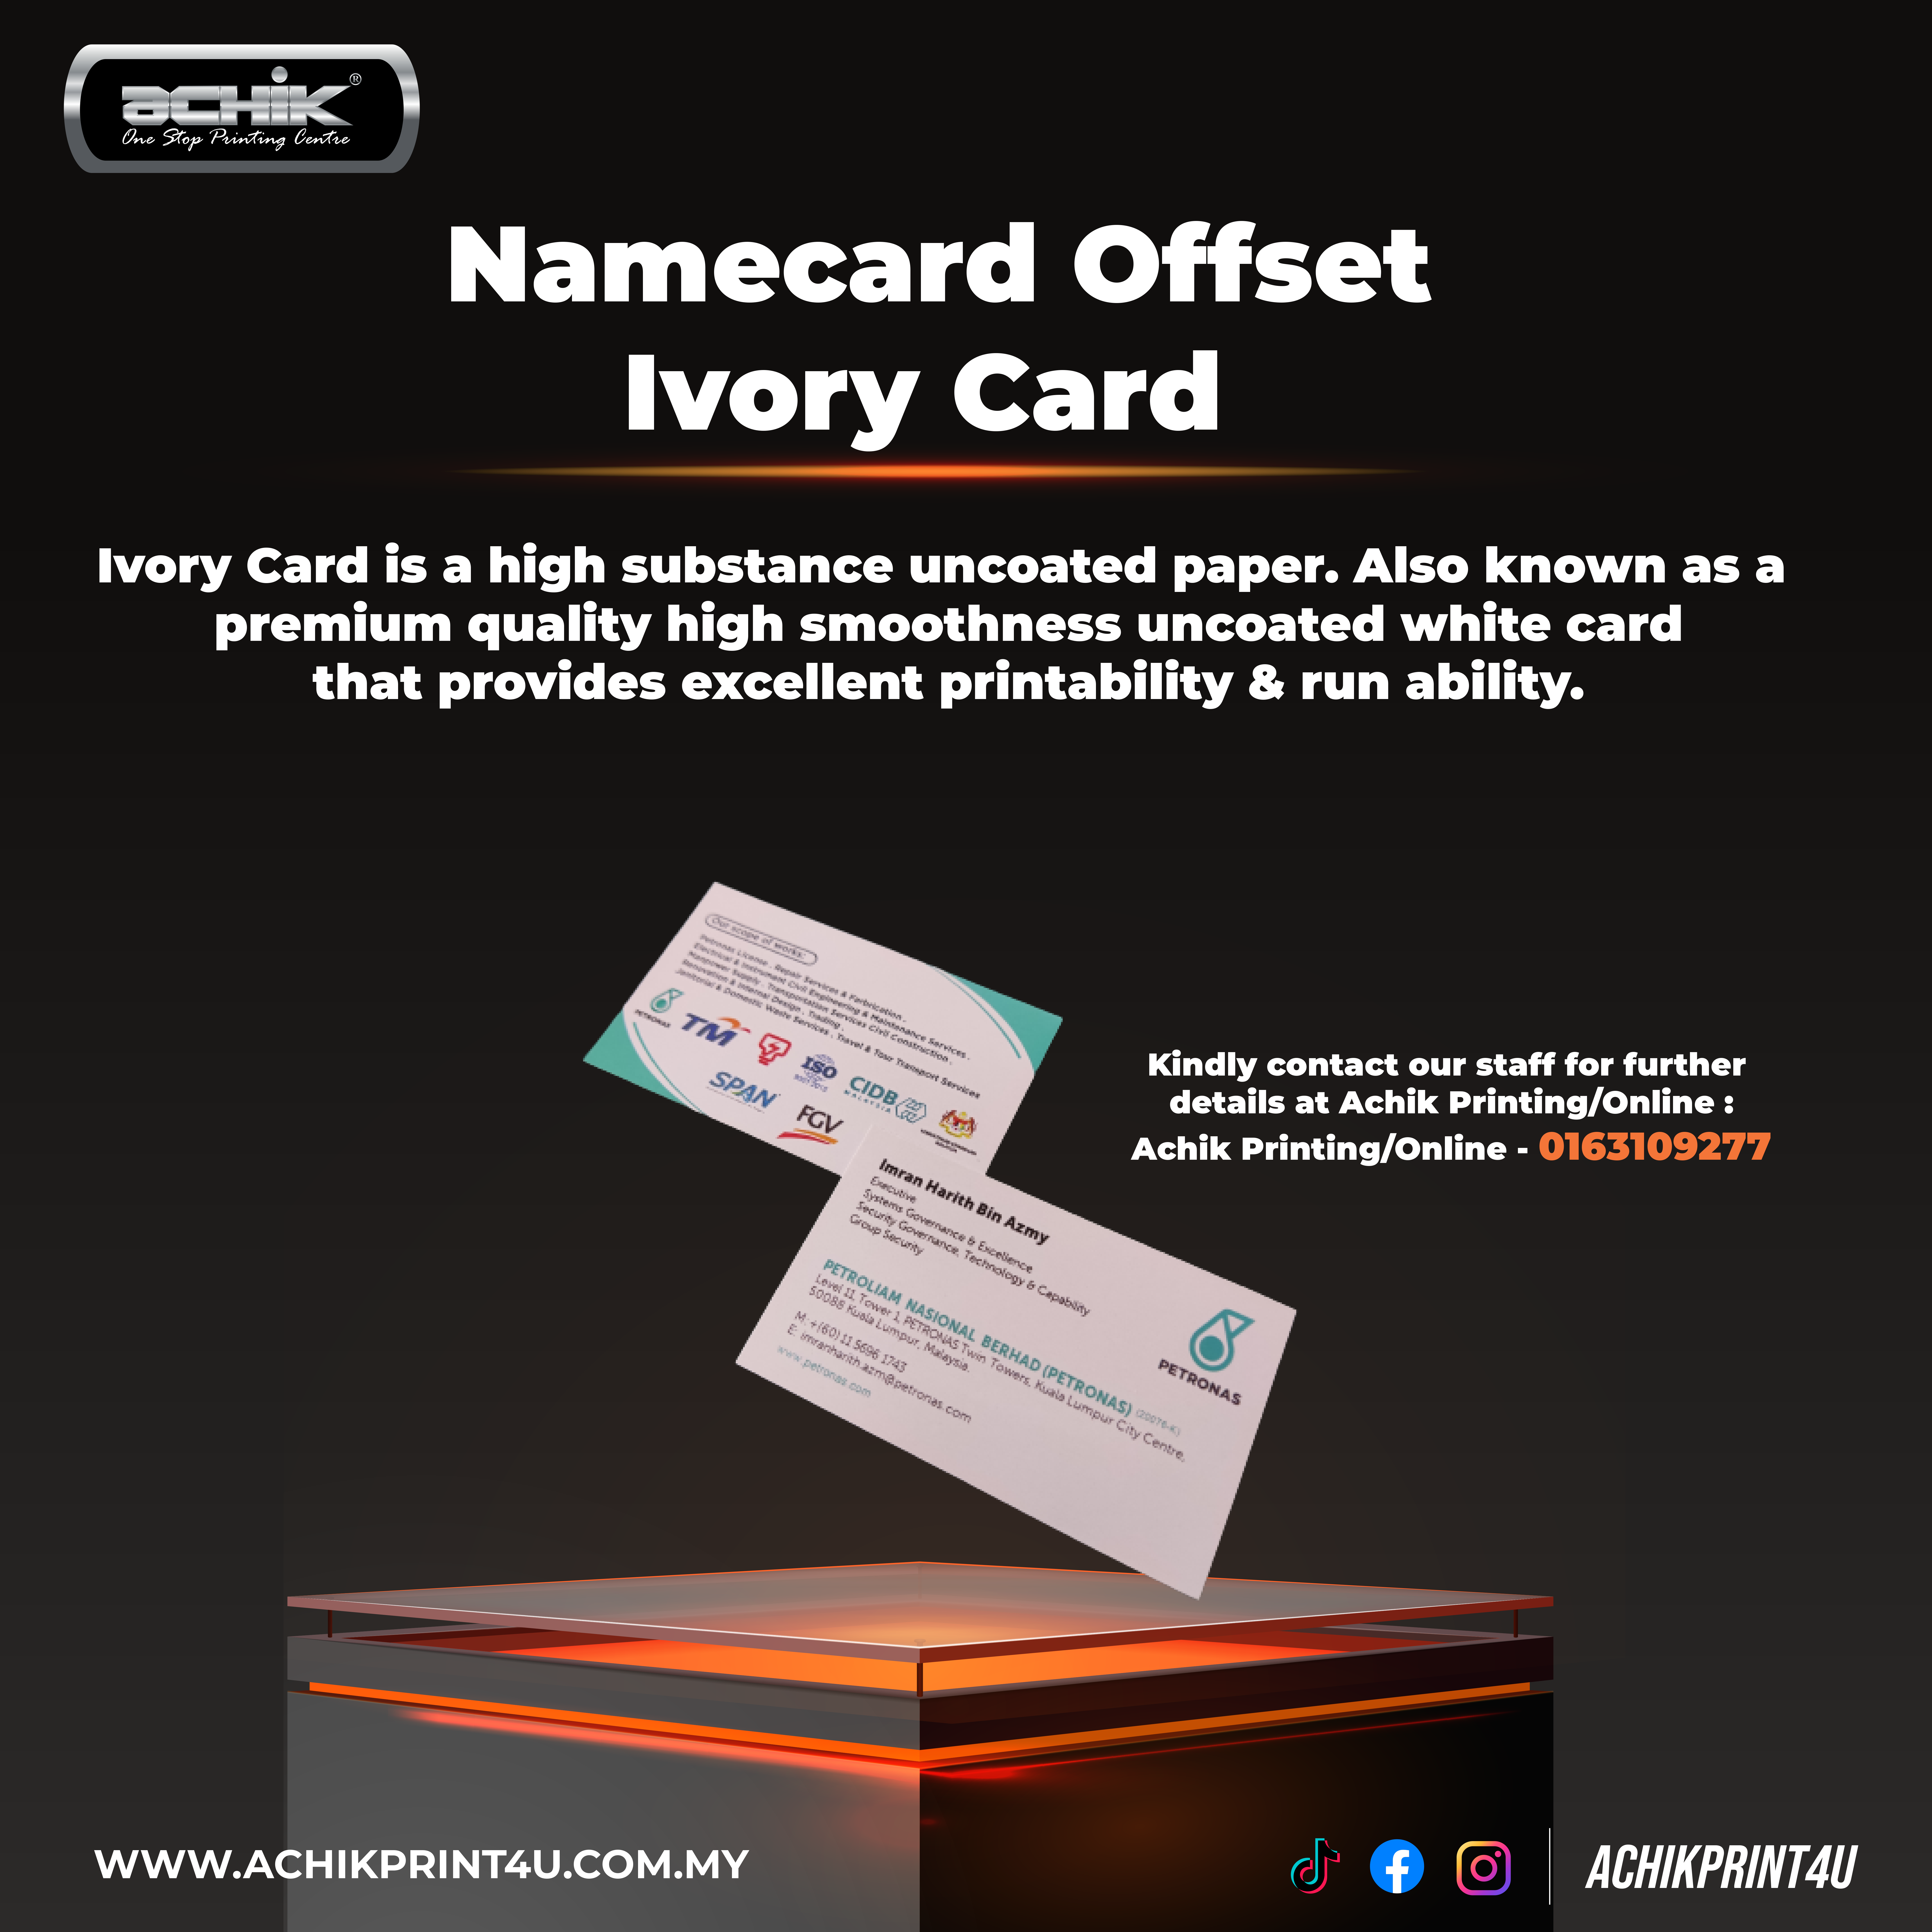 Namecard Offset - Ivory Card